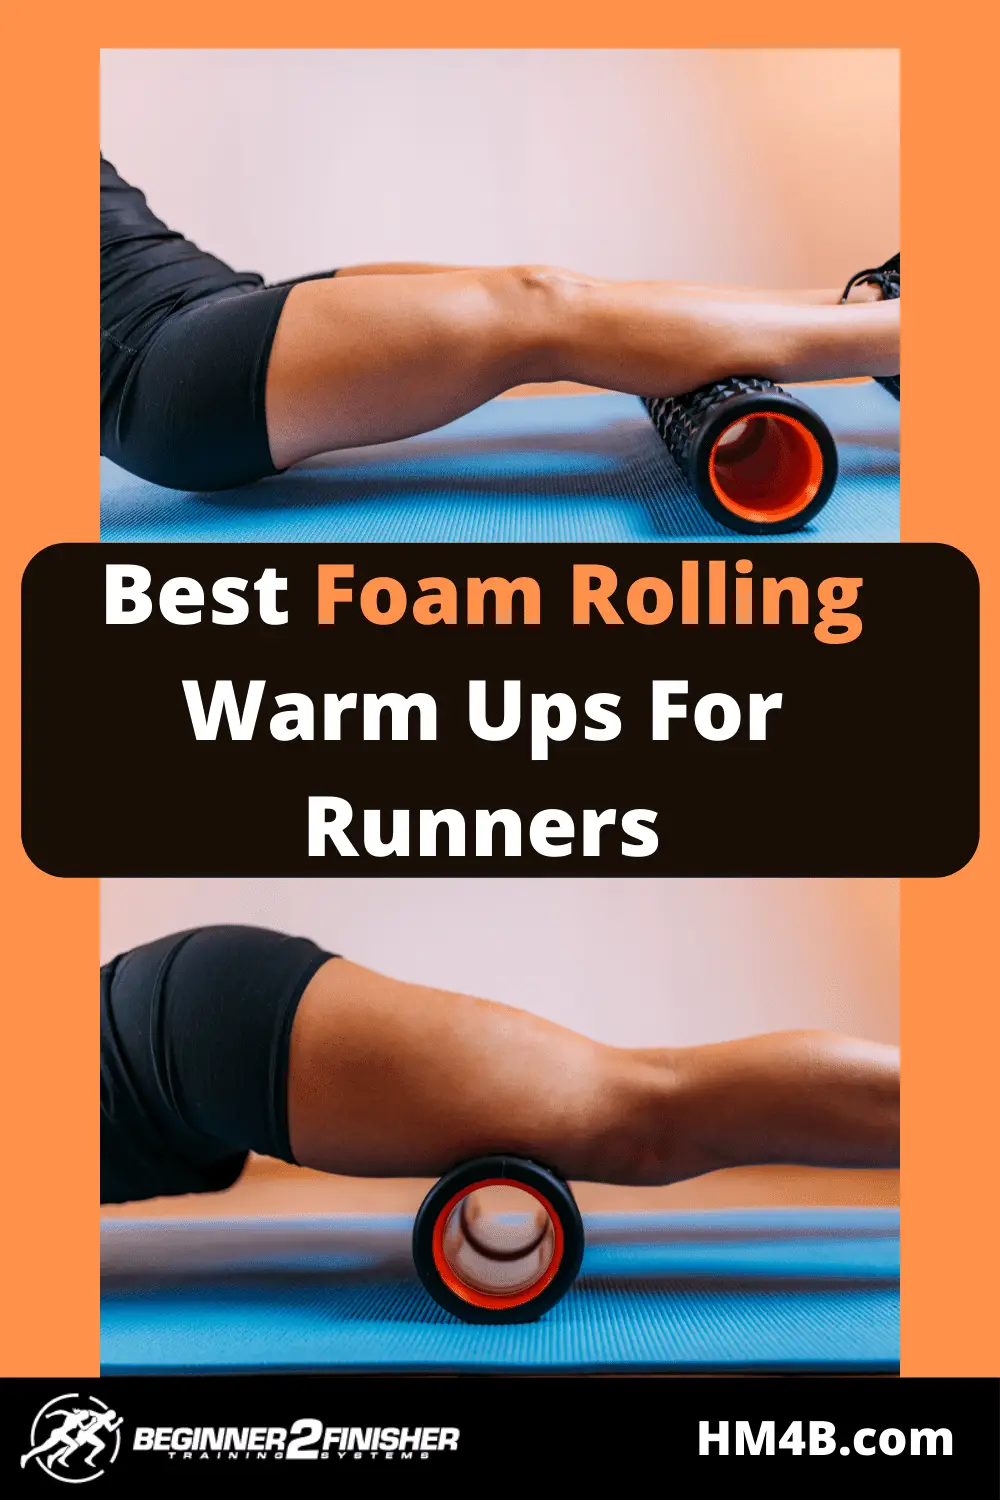 The 6 Best Foam Rolling Warm Ups for Runners